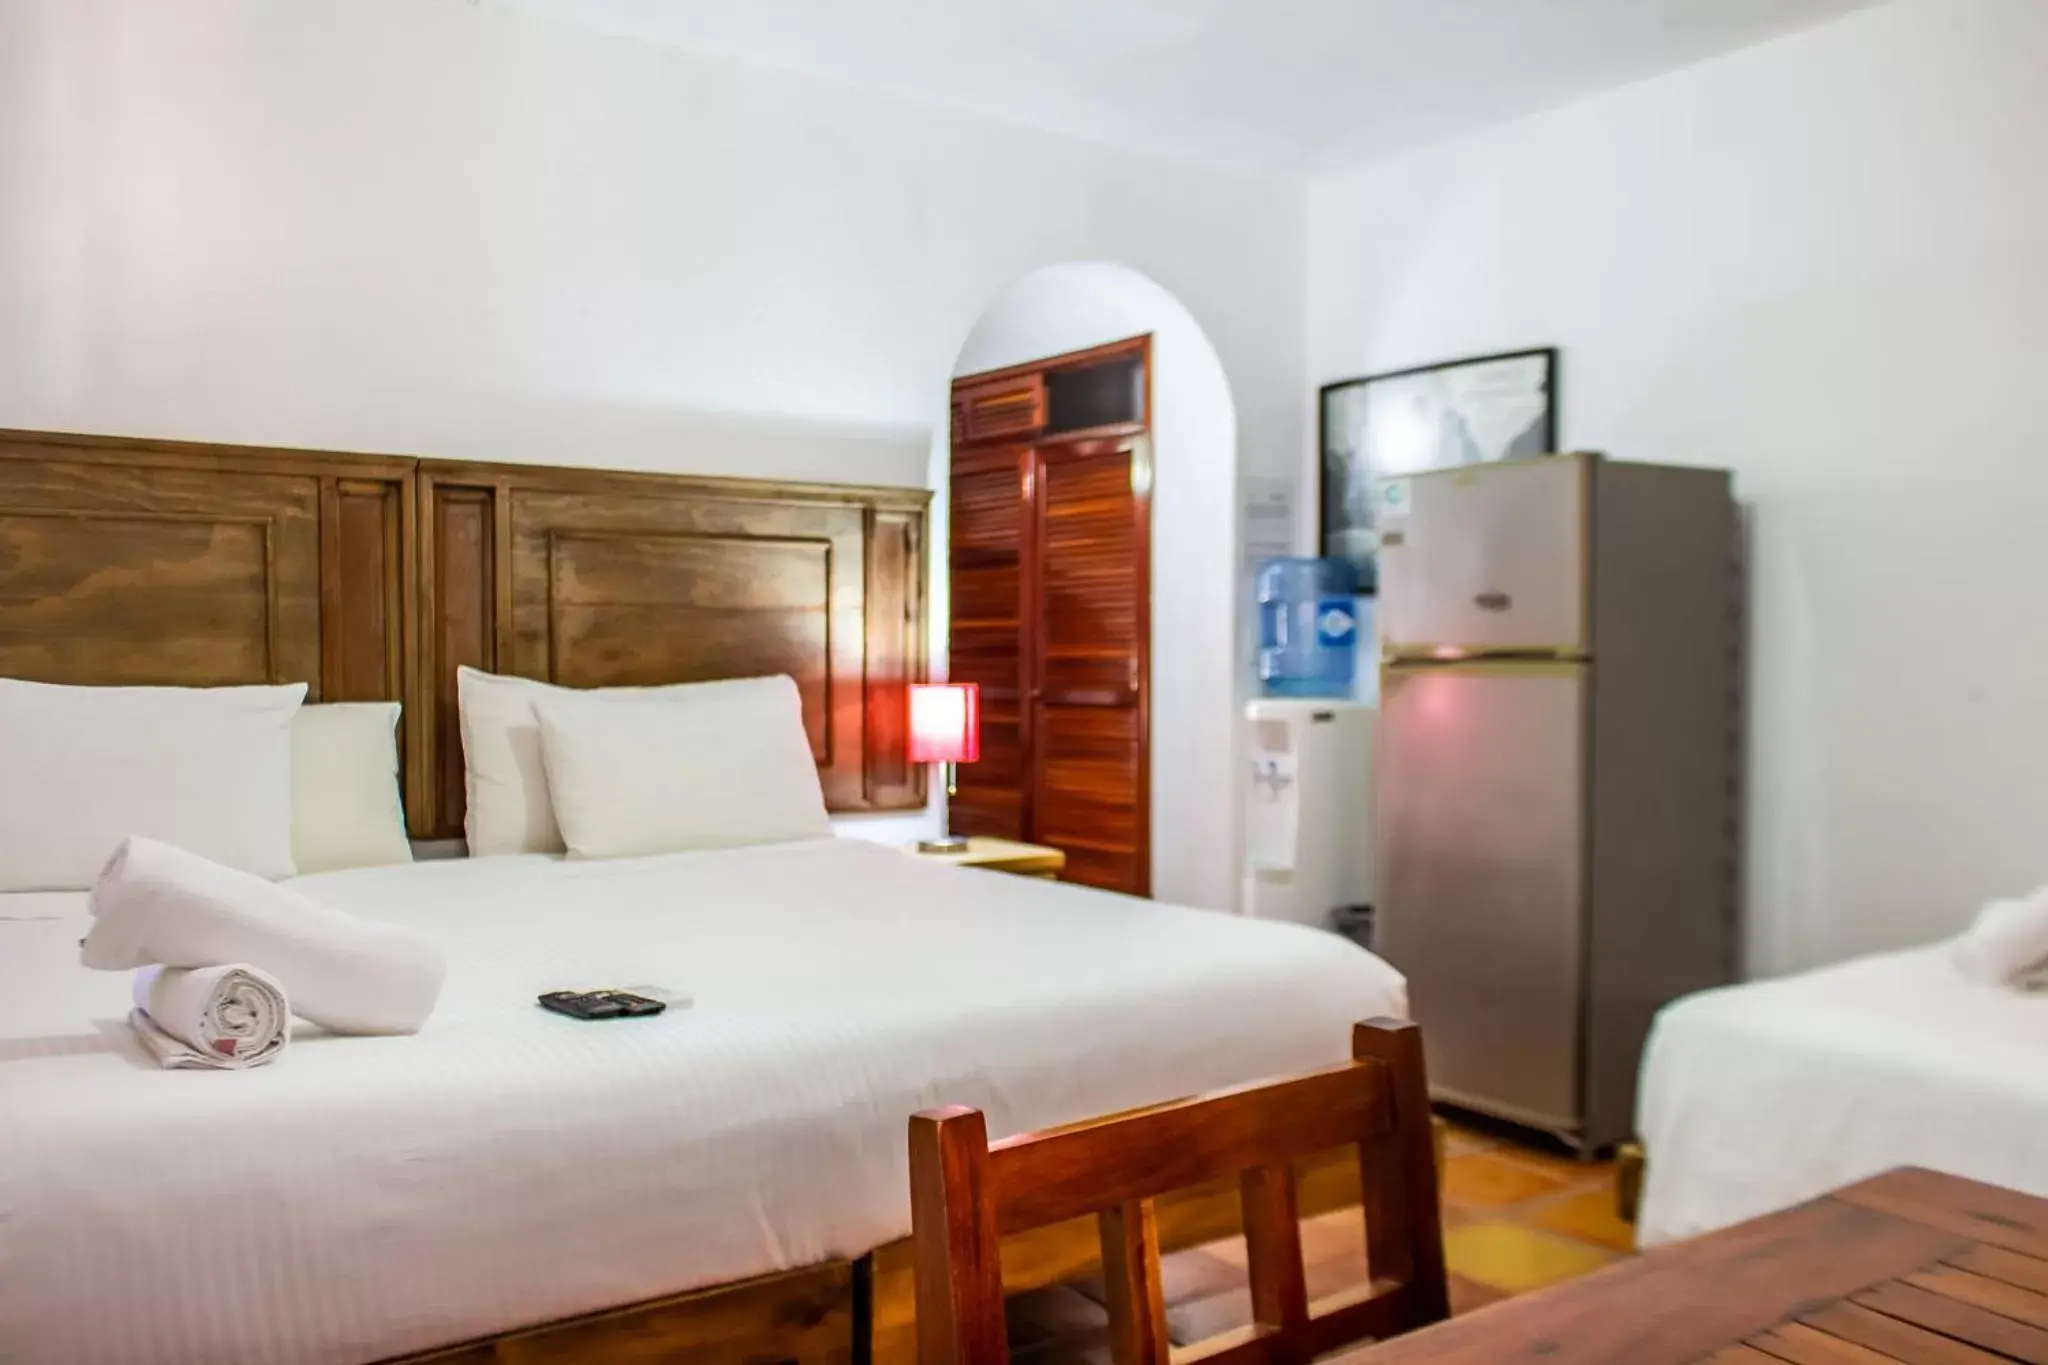 Budget Triple Room in Apart Hotel Casaejido